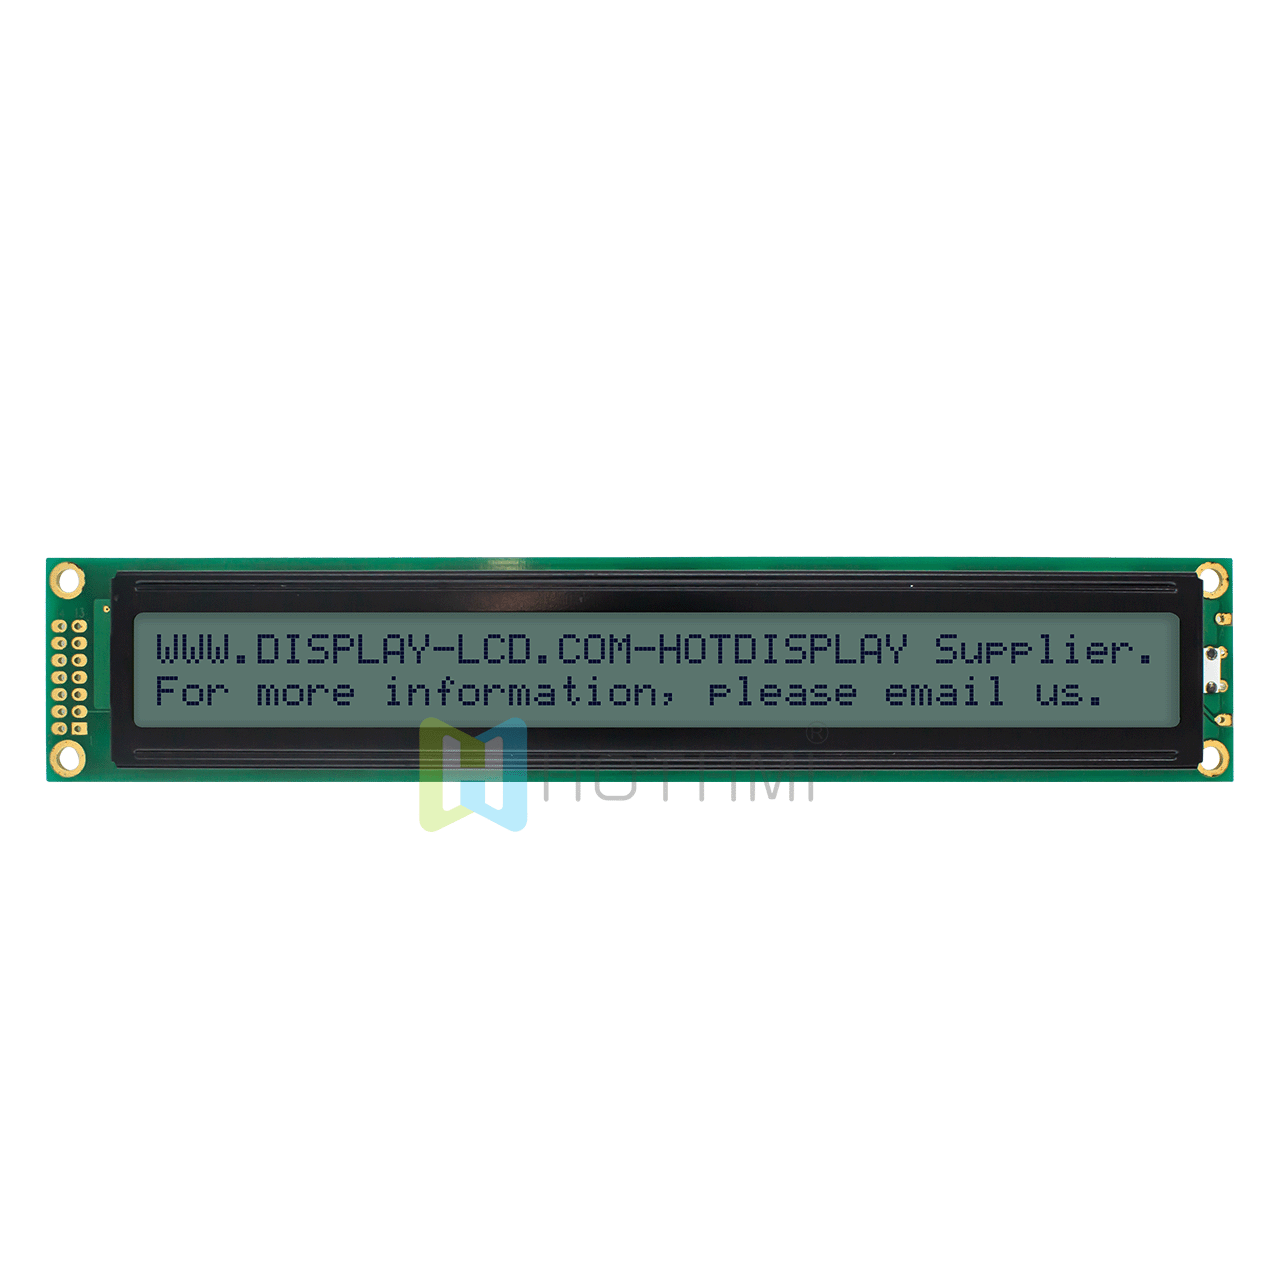 2X40 字符单色液晶显示屏 | STN 正显 | 带黄绿背光 | Arduino显示屏 | Adruino | 5.0v